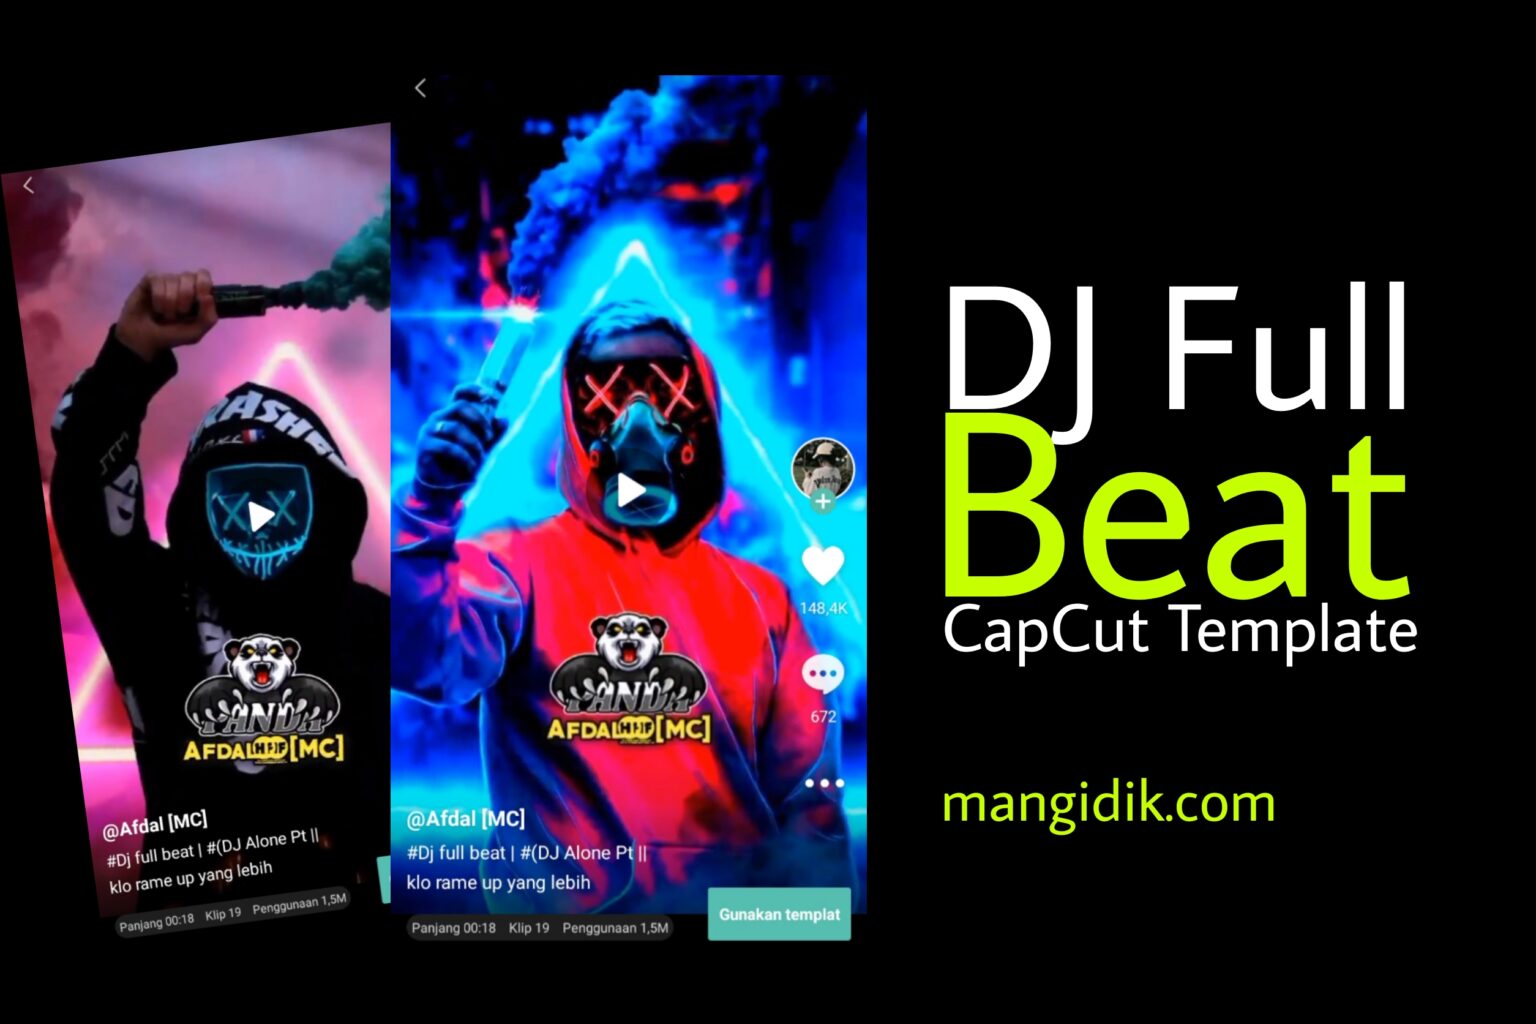 DJ Full Beat CapCut Template Link Without Watermark Mang Idik